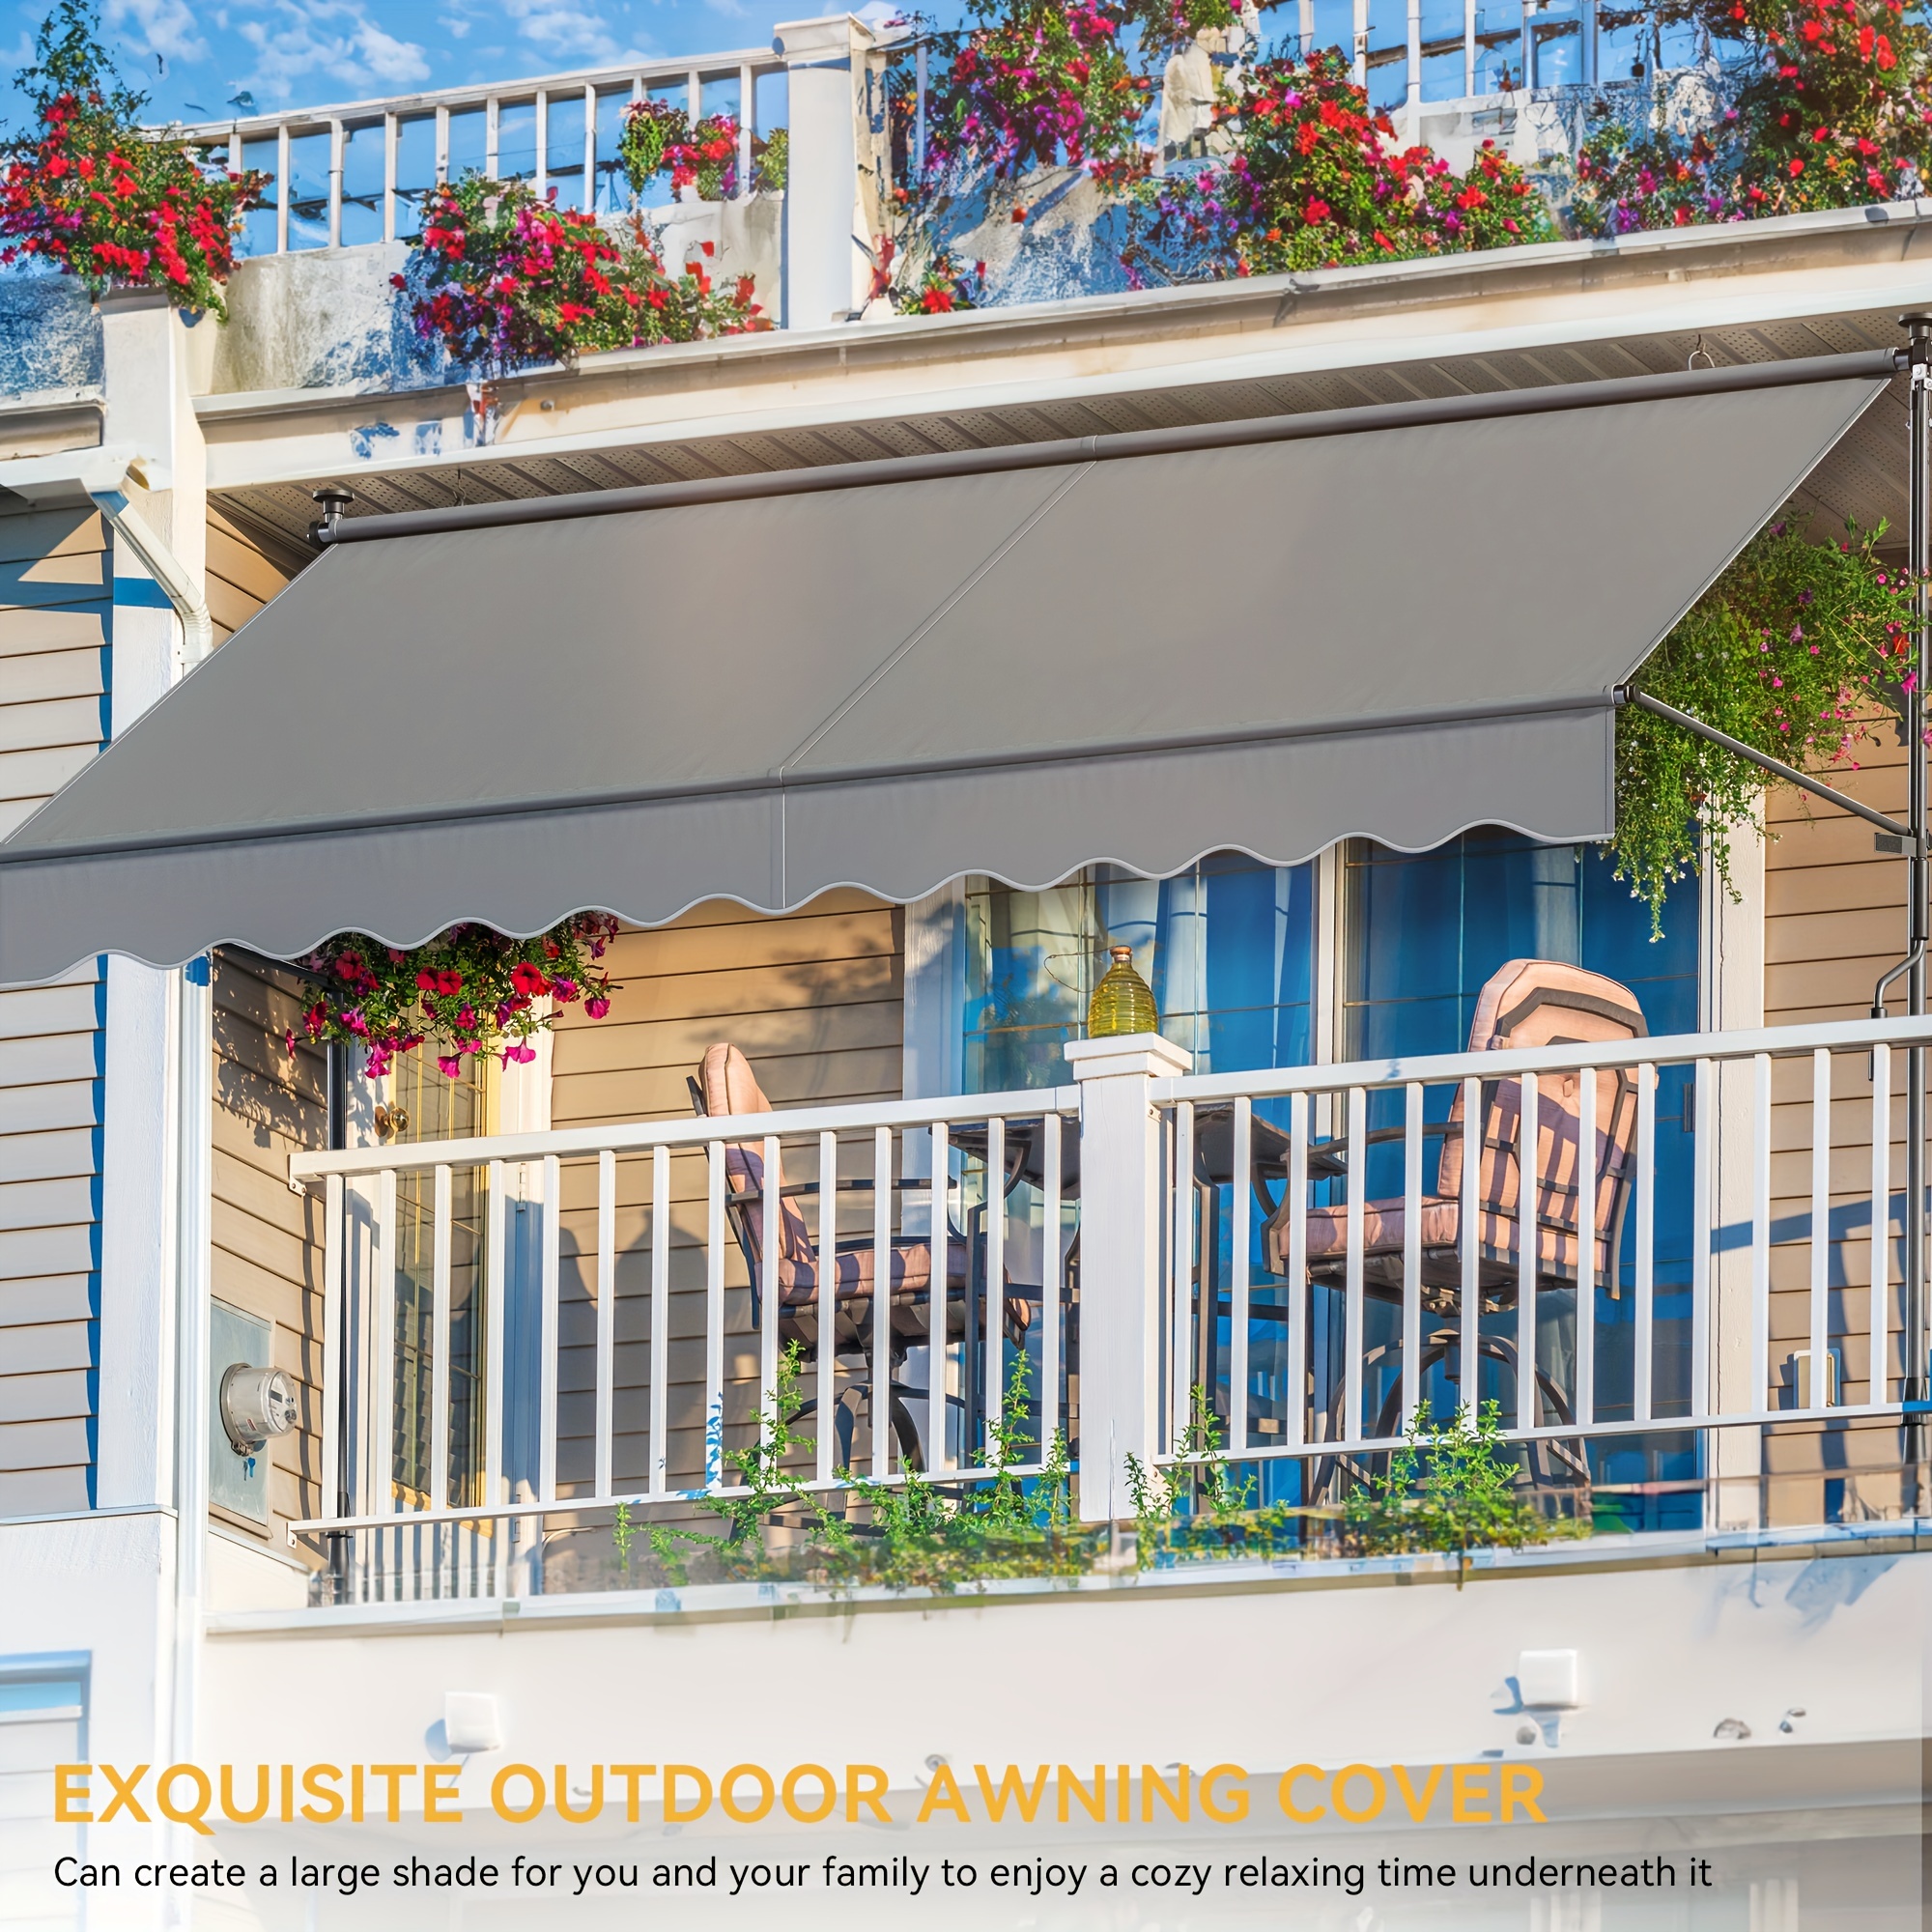 

Balconera Manual Retractable Awning, Outdoor Sun Shade Window Awning With Uv Protection, Waterproof Patio Canopy Awnings For Doors, Windows, Decks, Dark Gray